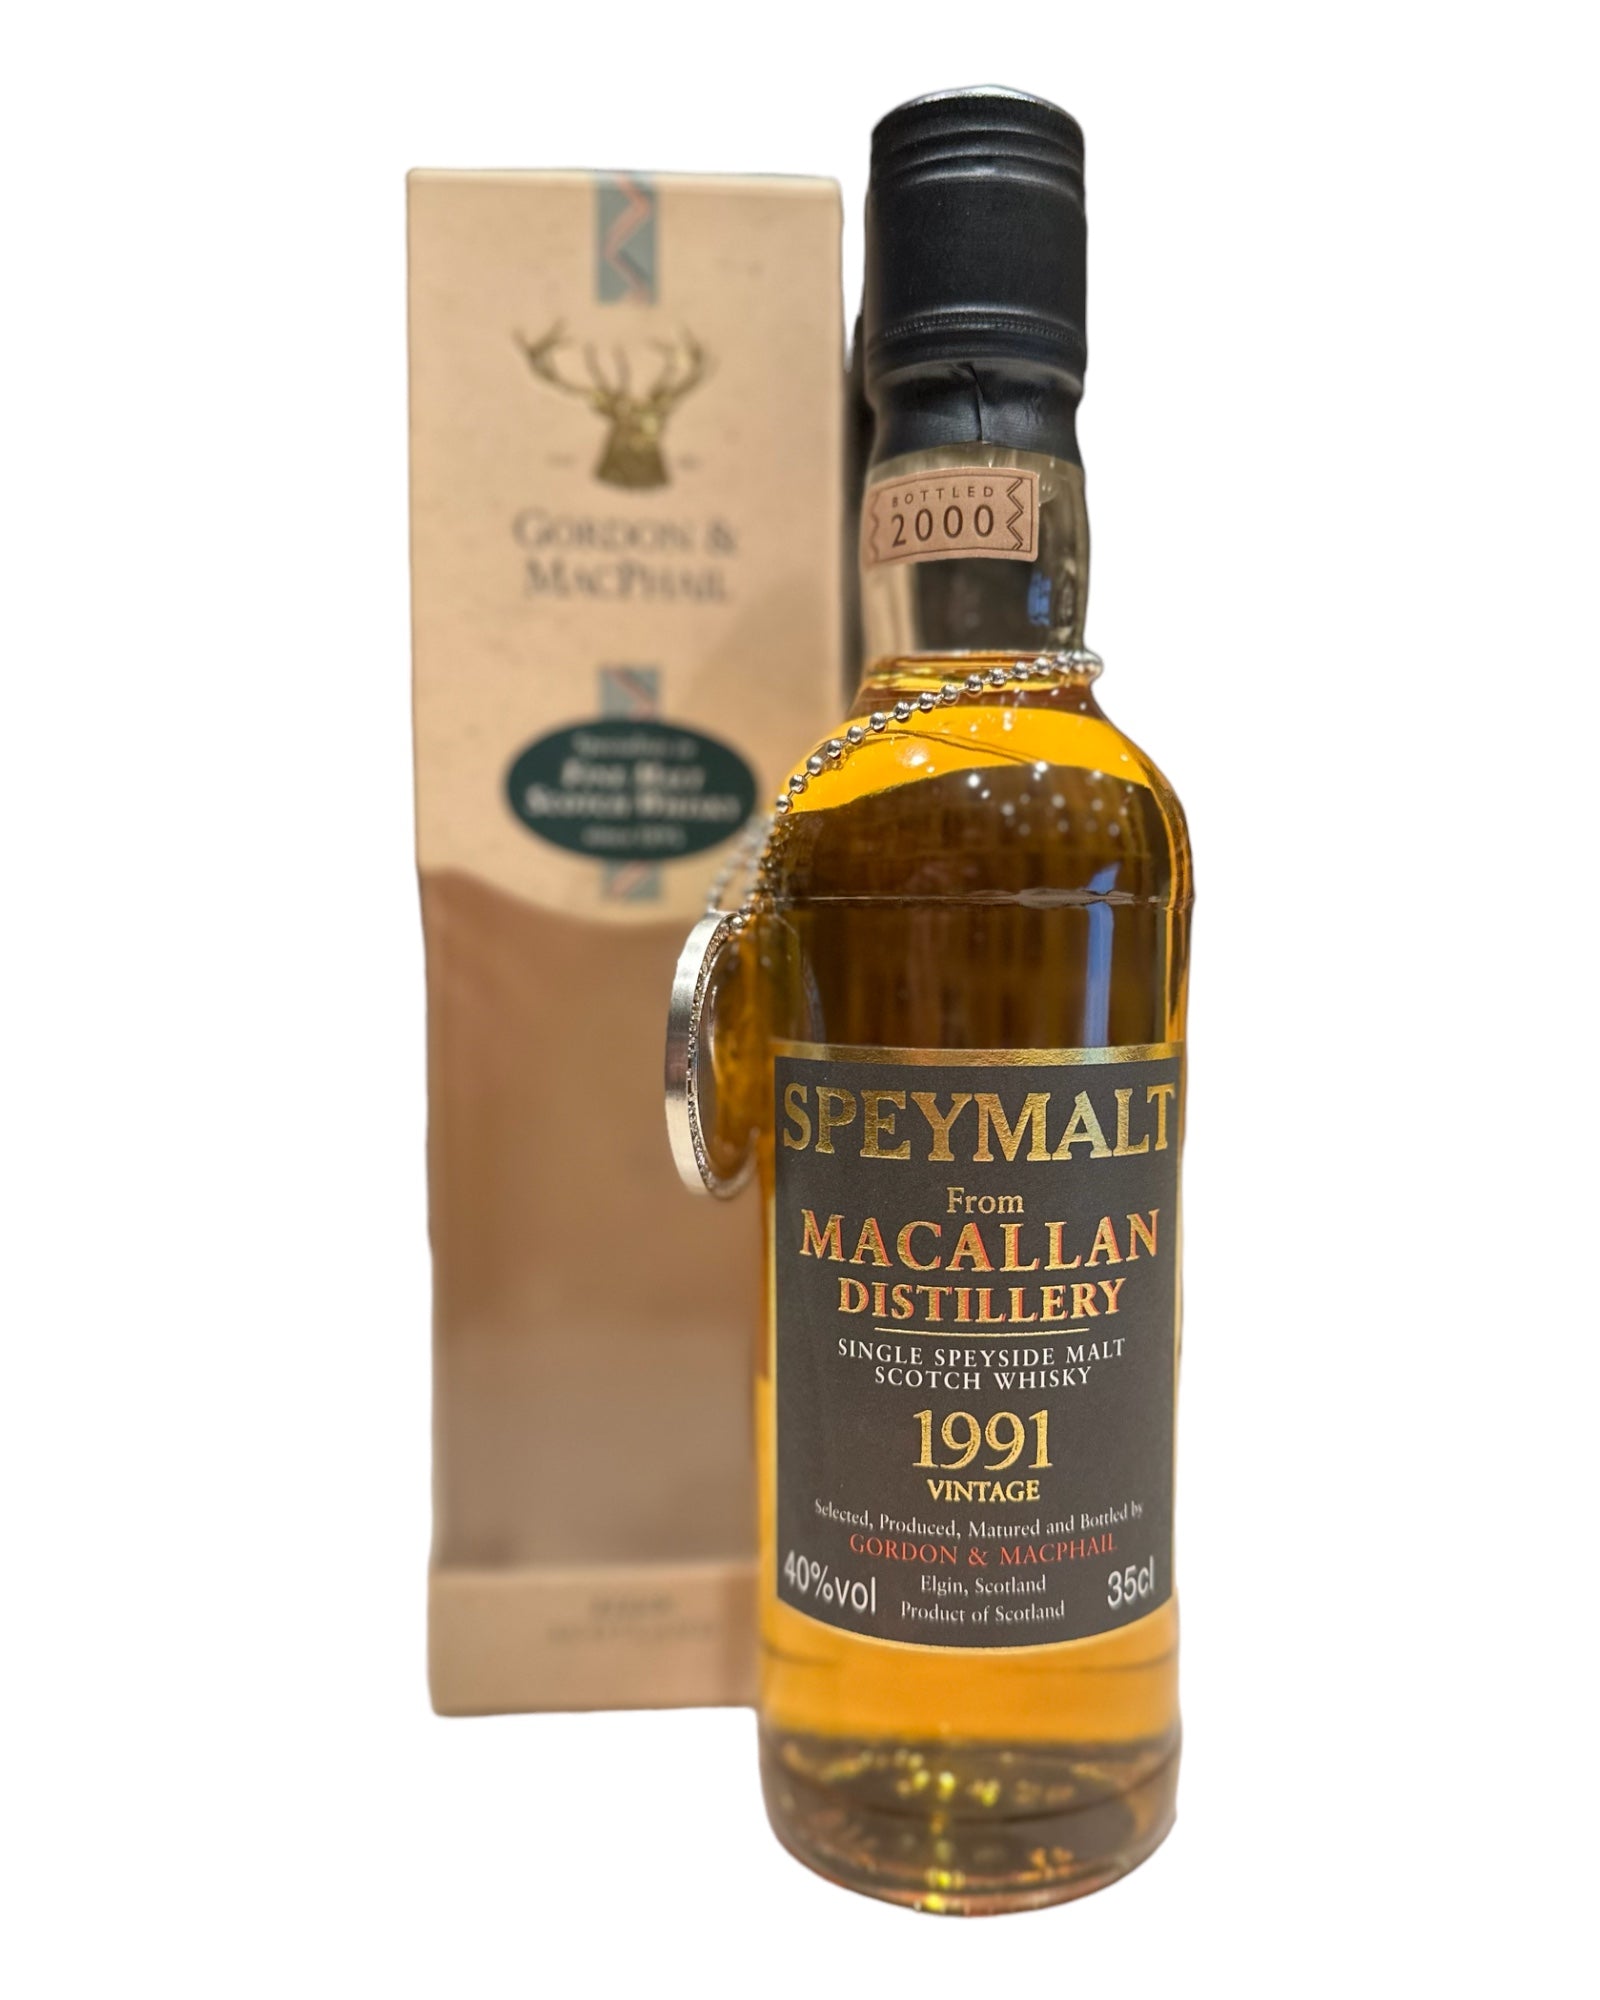 Introducing the Macallan 1991 Gordon and MacPhail Speymalt!